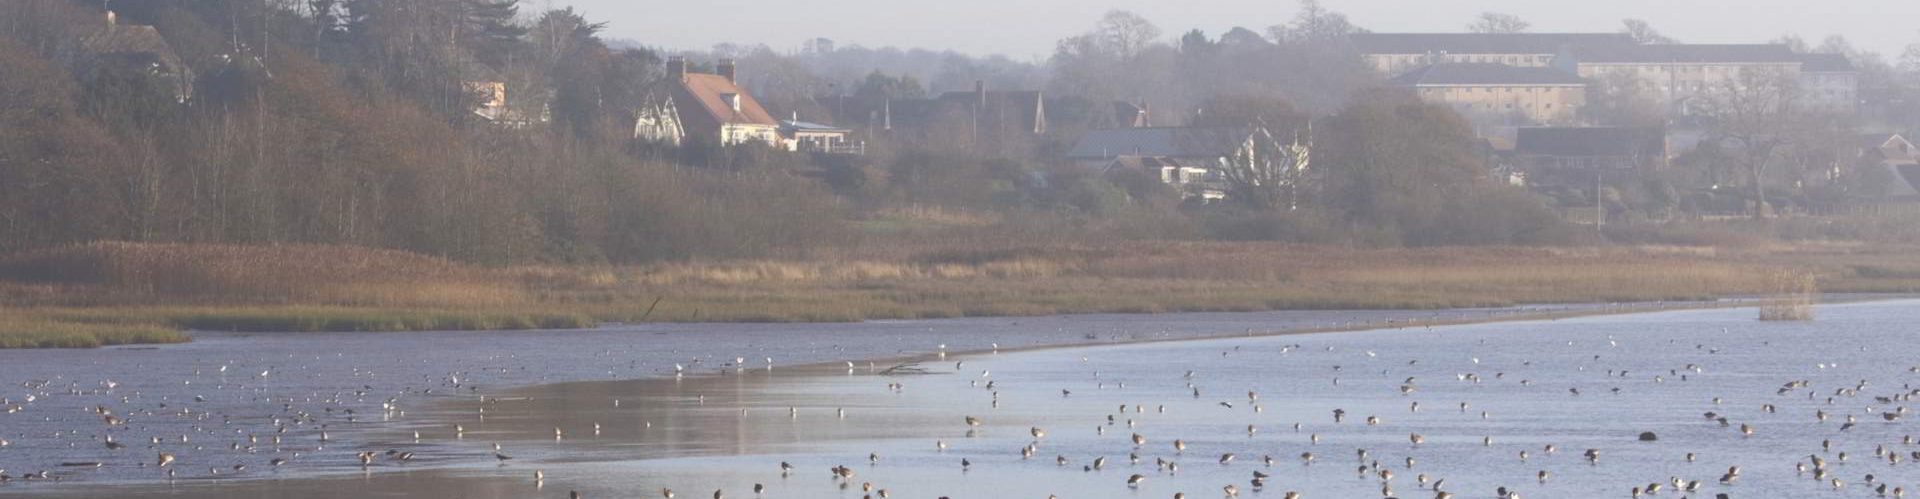 wading birds in the Exe Estuary, Devon